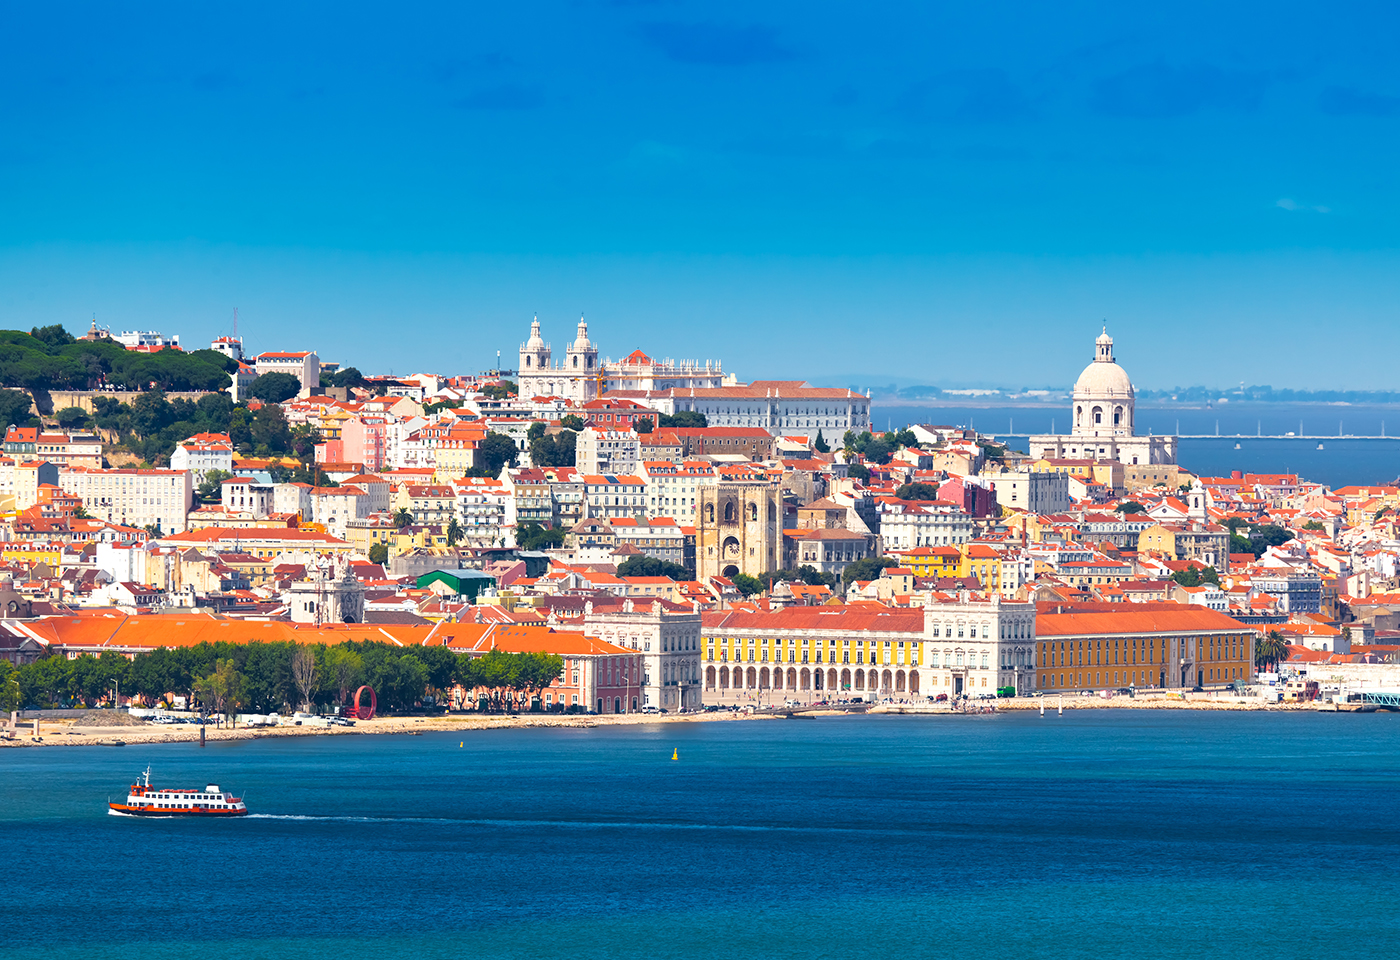 Lisboa, parada en una ruta por Europa en caravana 